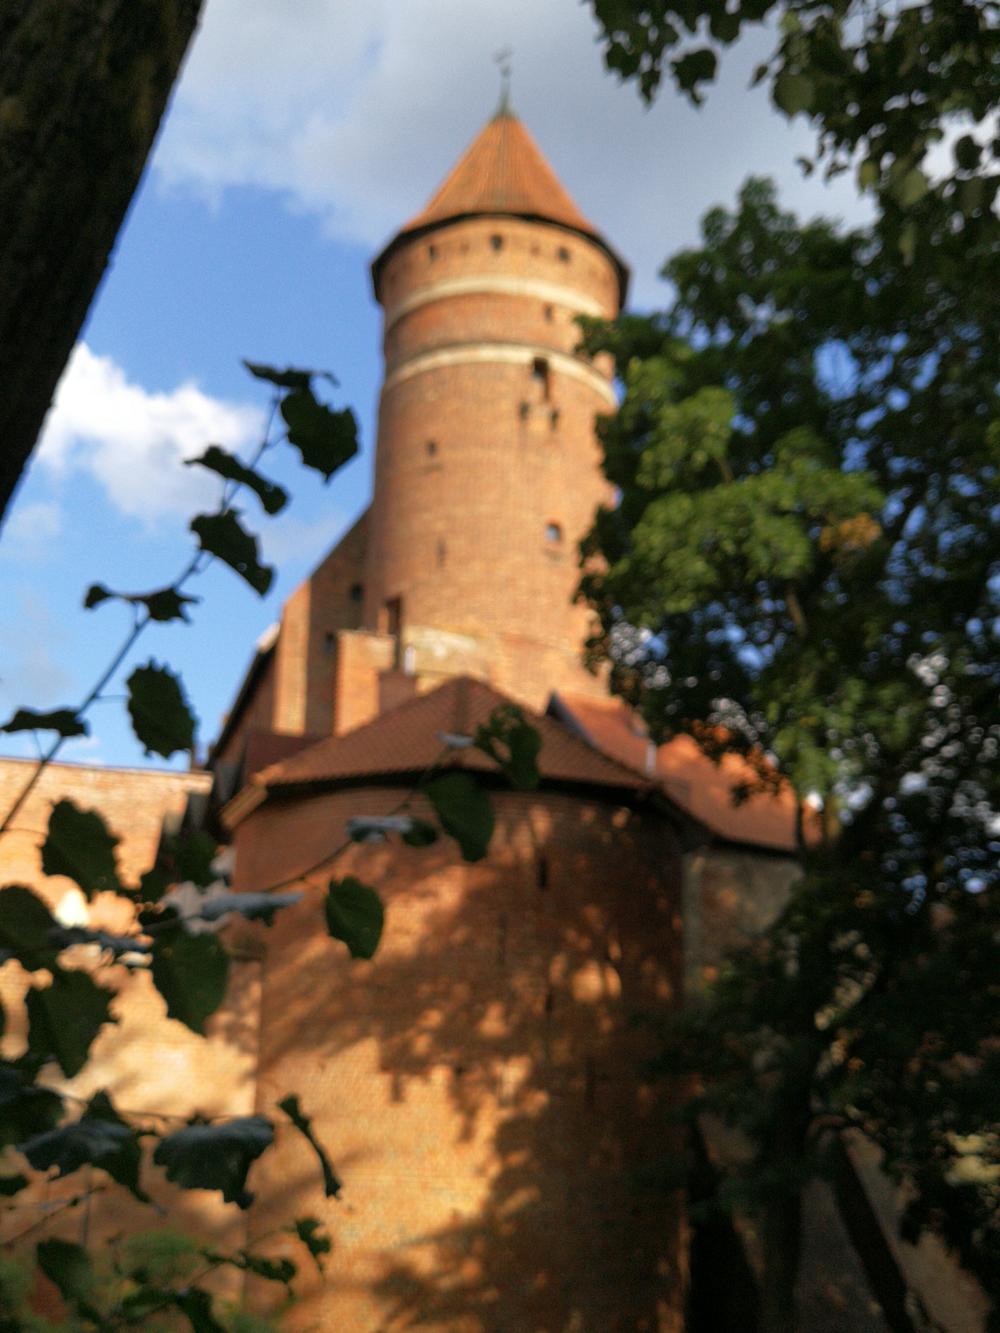 Castle Allenstein/Olsztyn (Photo: Gudrun Wolfschmi